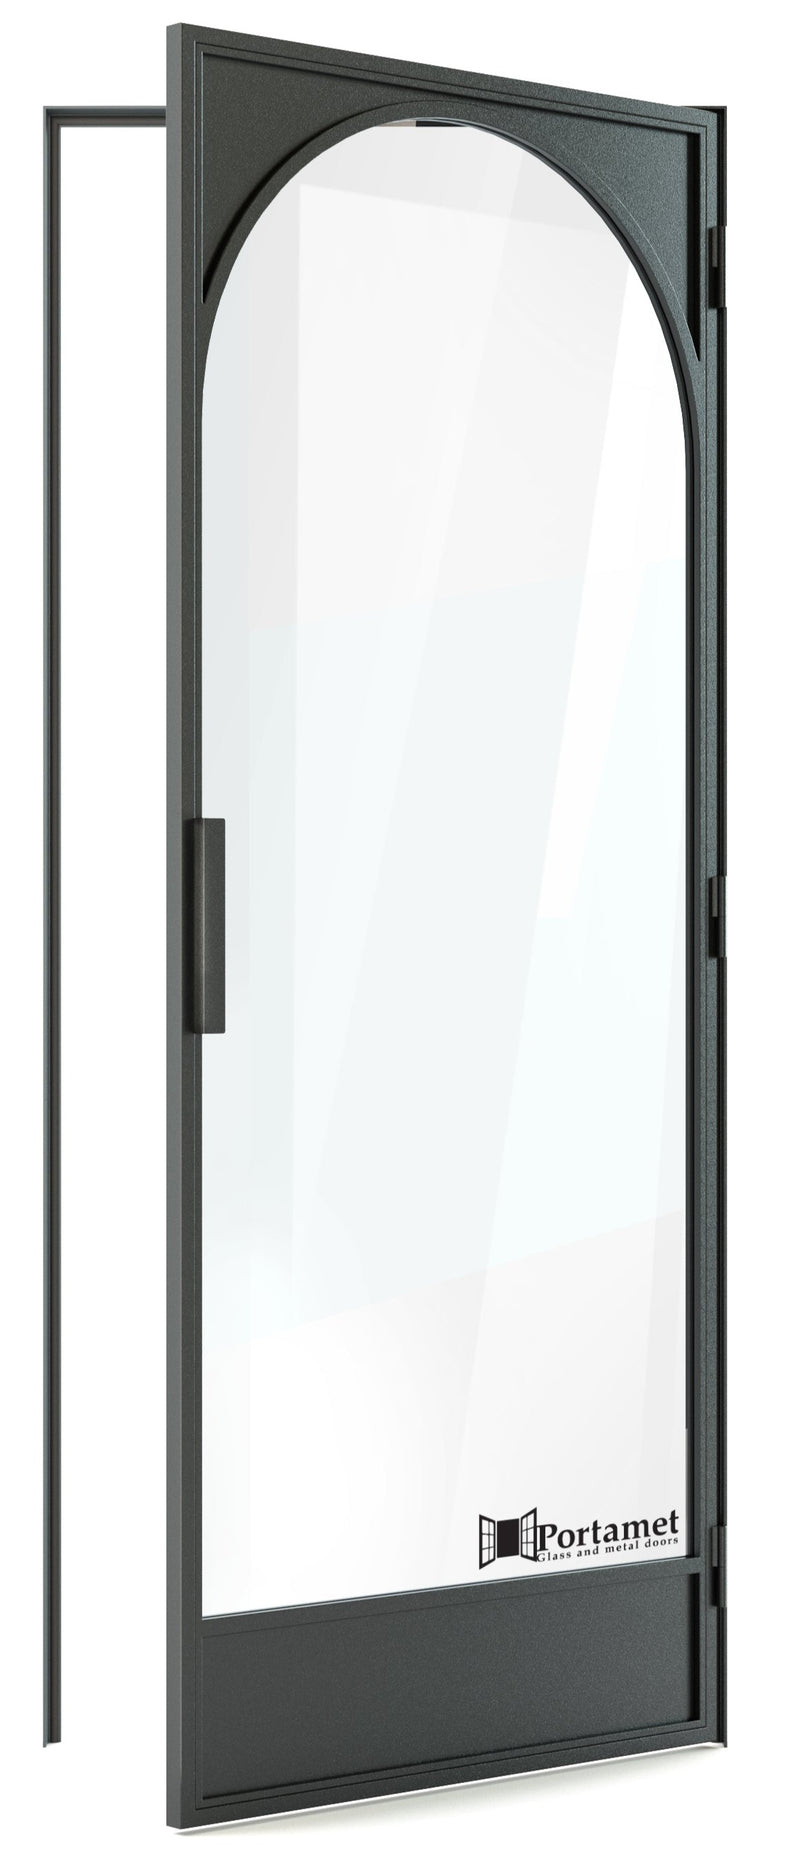 Portamet by Sfarzo - Puro Classic Single Glazed Steel Hinged Door with Frame